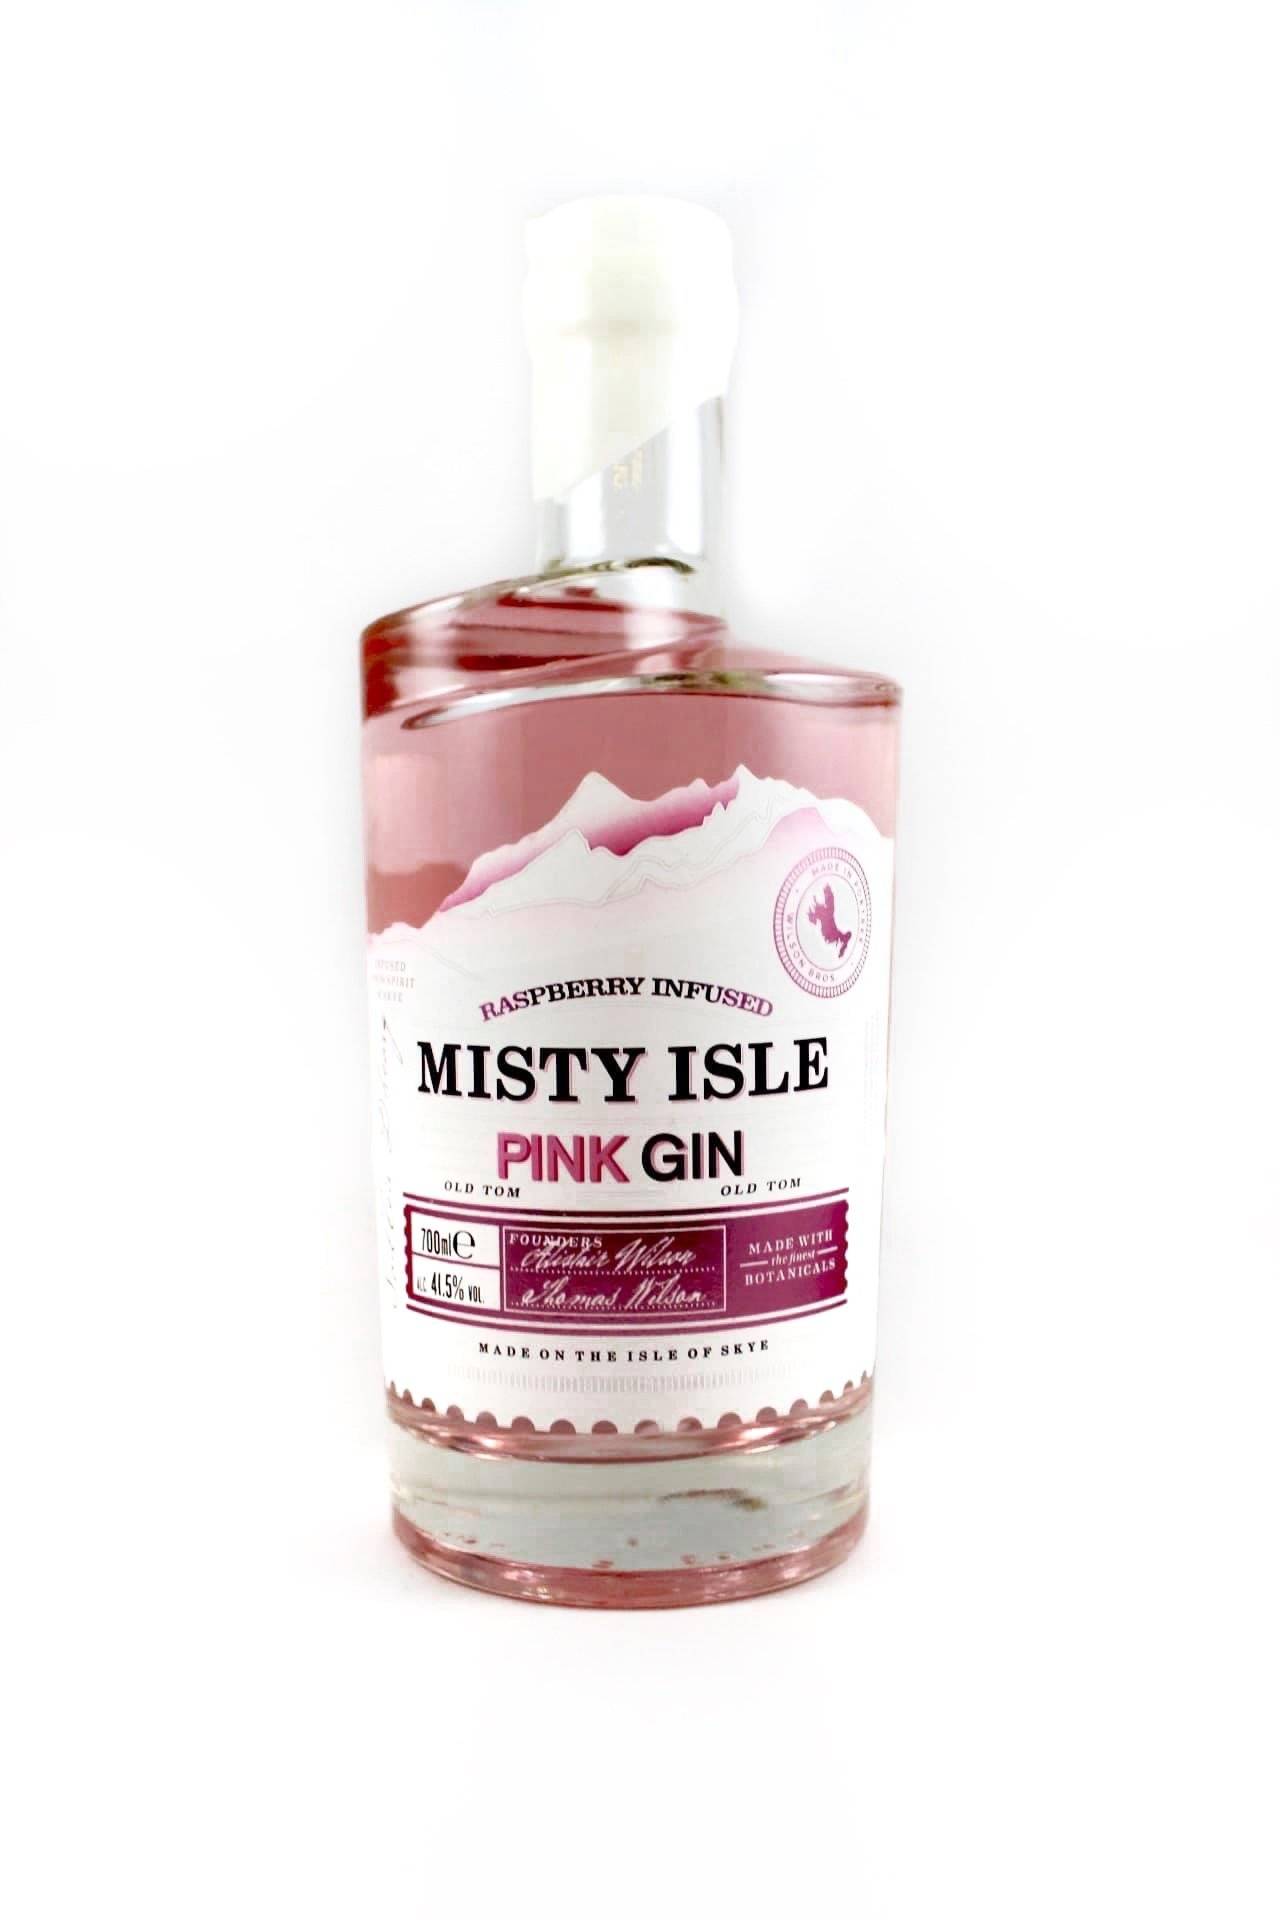 Misty Isle Pink Gin